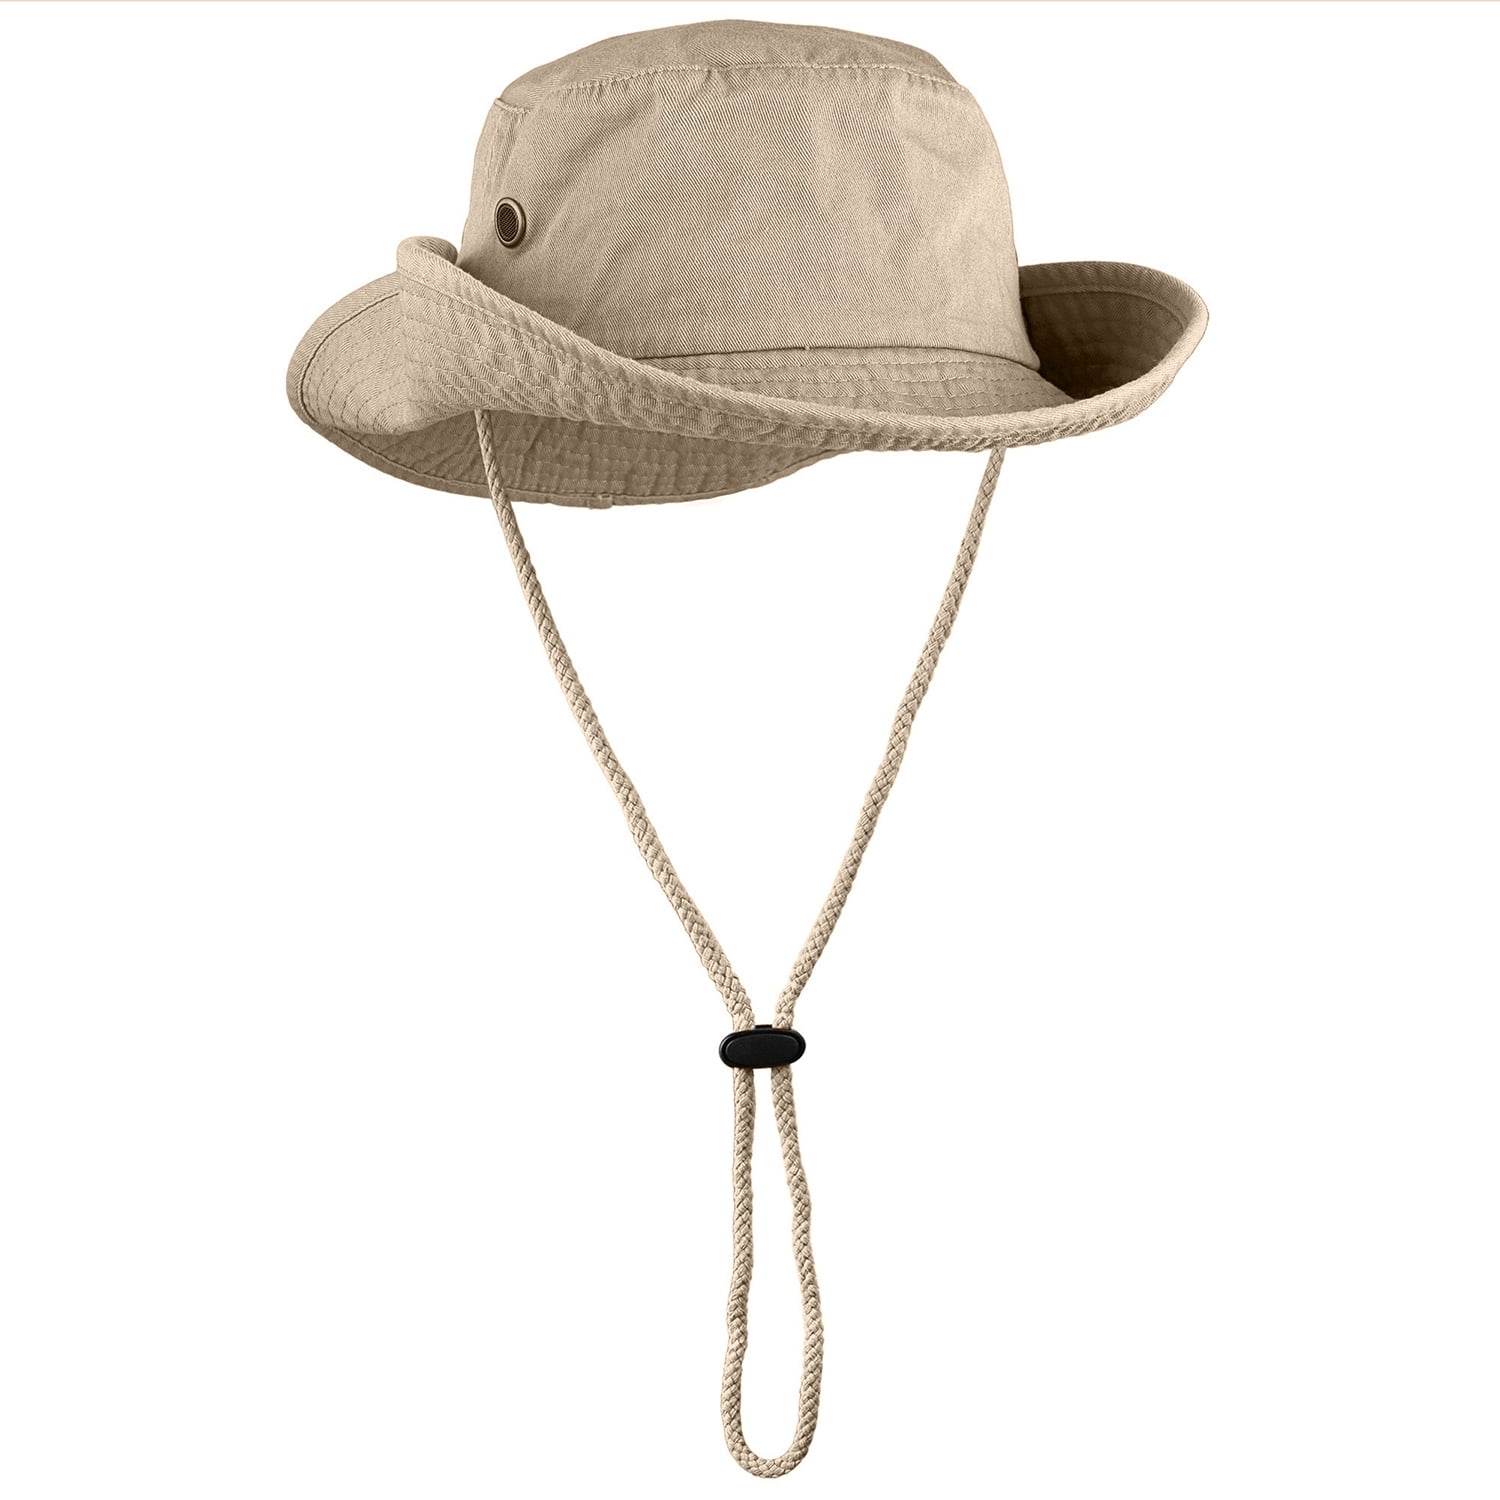 Falari Wide Brim Hiking Fishing Safari Boonie Bucket Hats 100% Cotton UV Sun Protection for Men Women Outdoor Activities S/M Khaki, Adult Unisex, Size